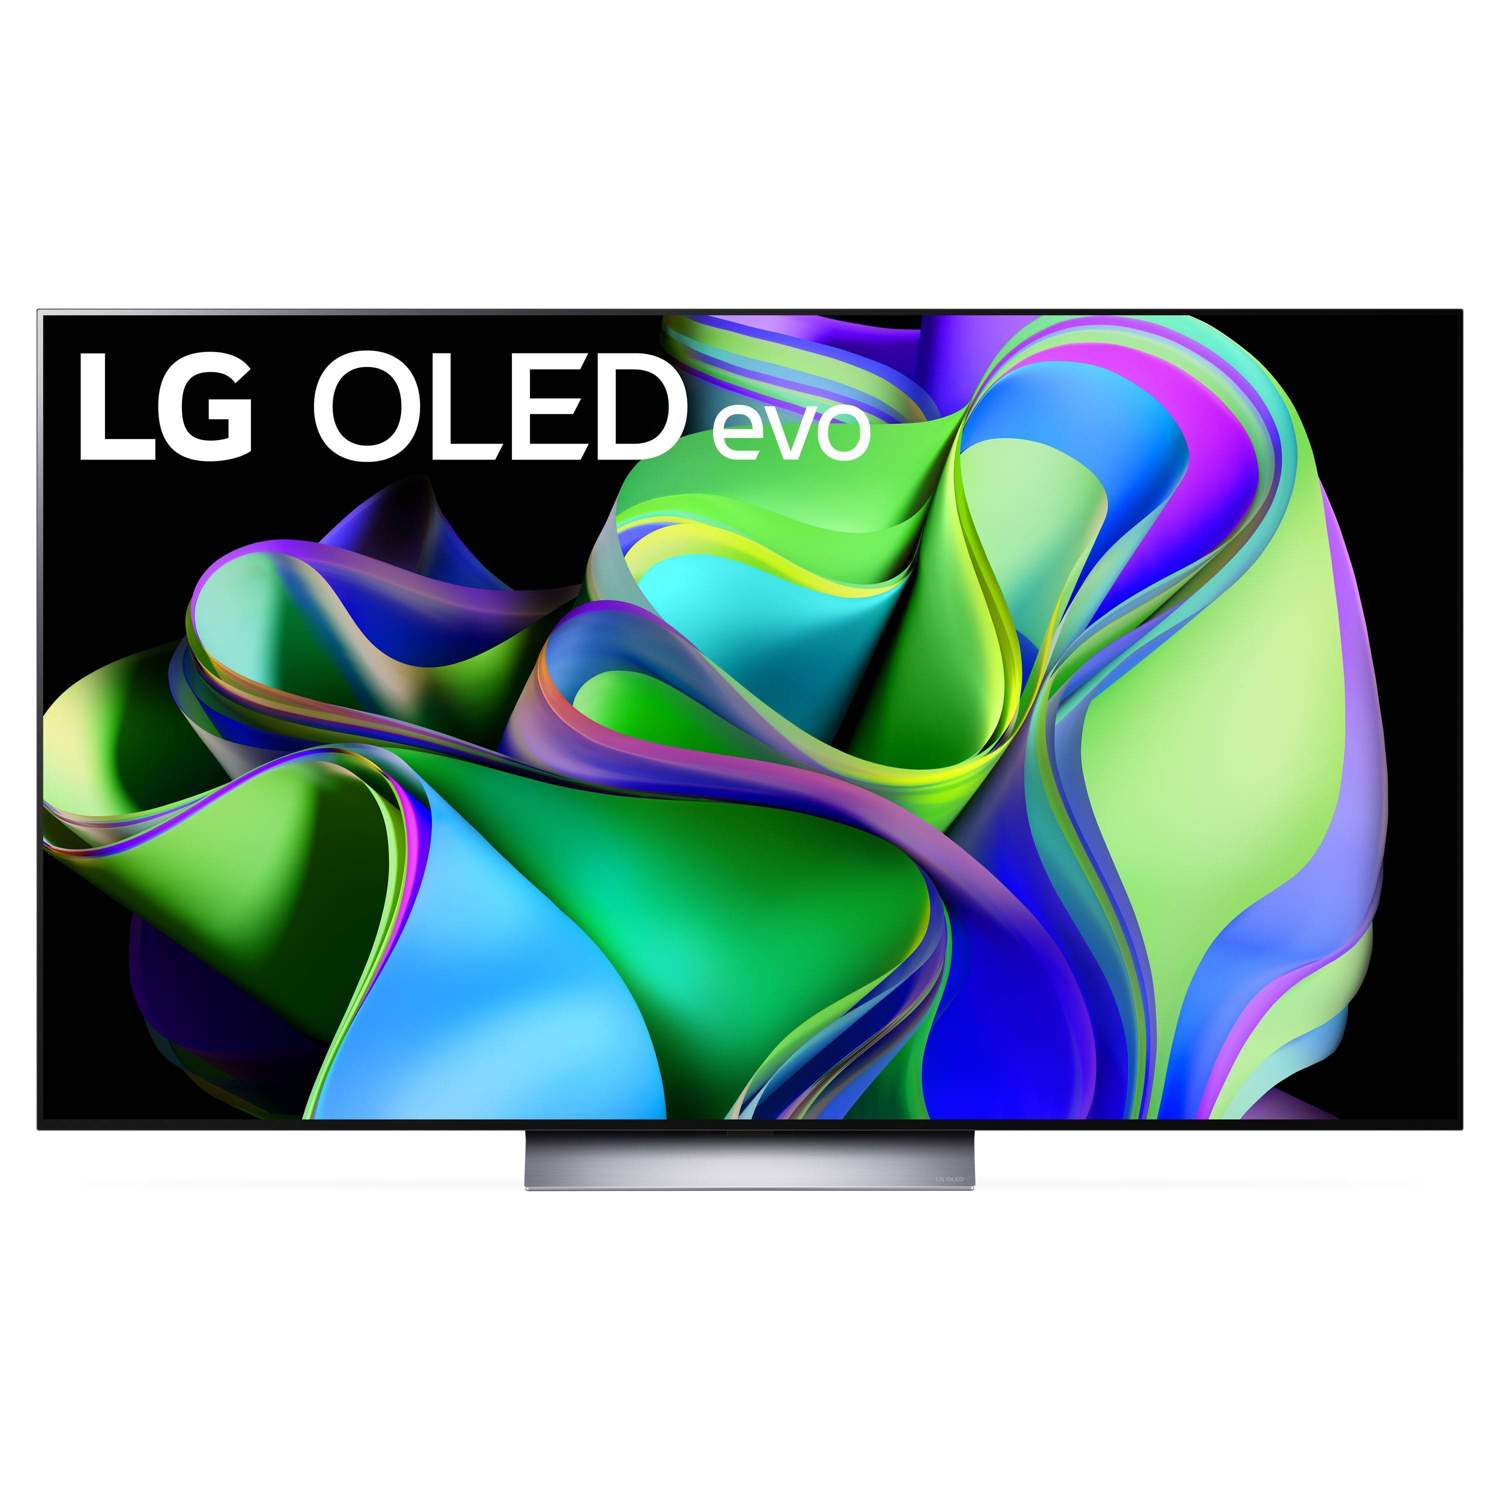 YMMV - 65" LG C3 OLED TV OLED65C3 @ Target $999.99